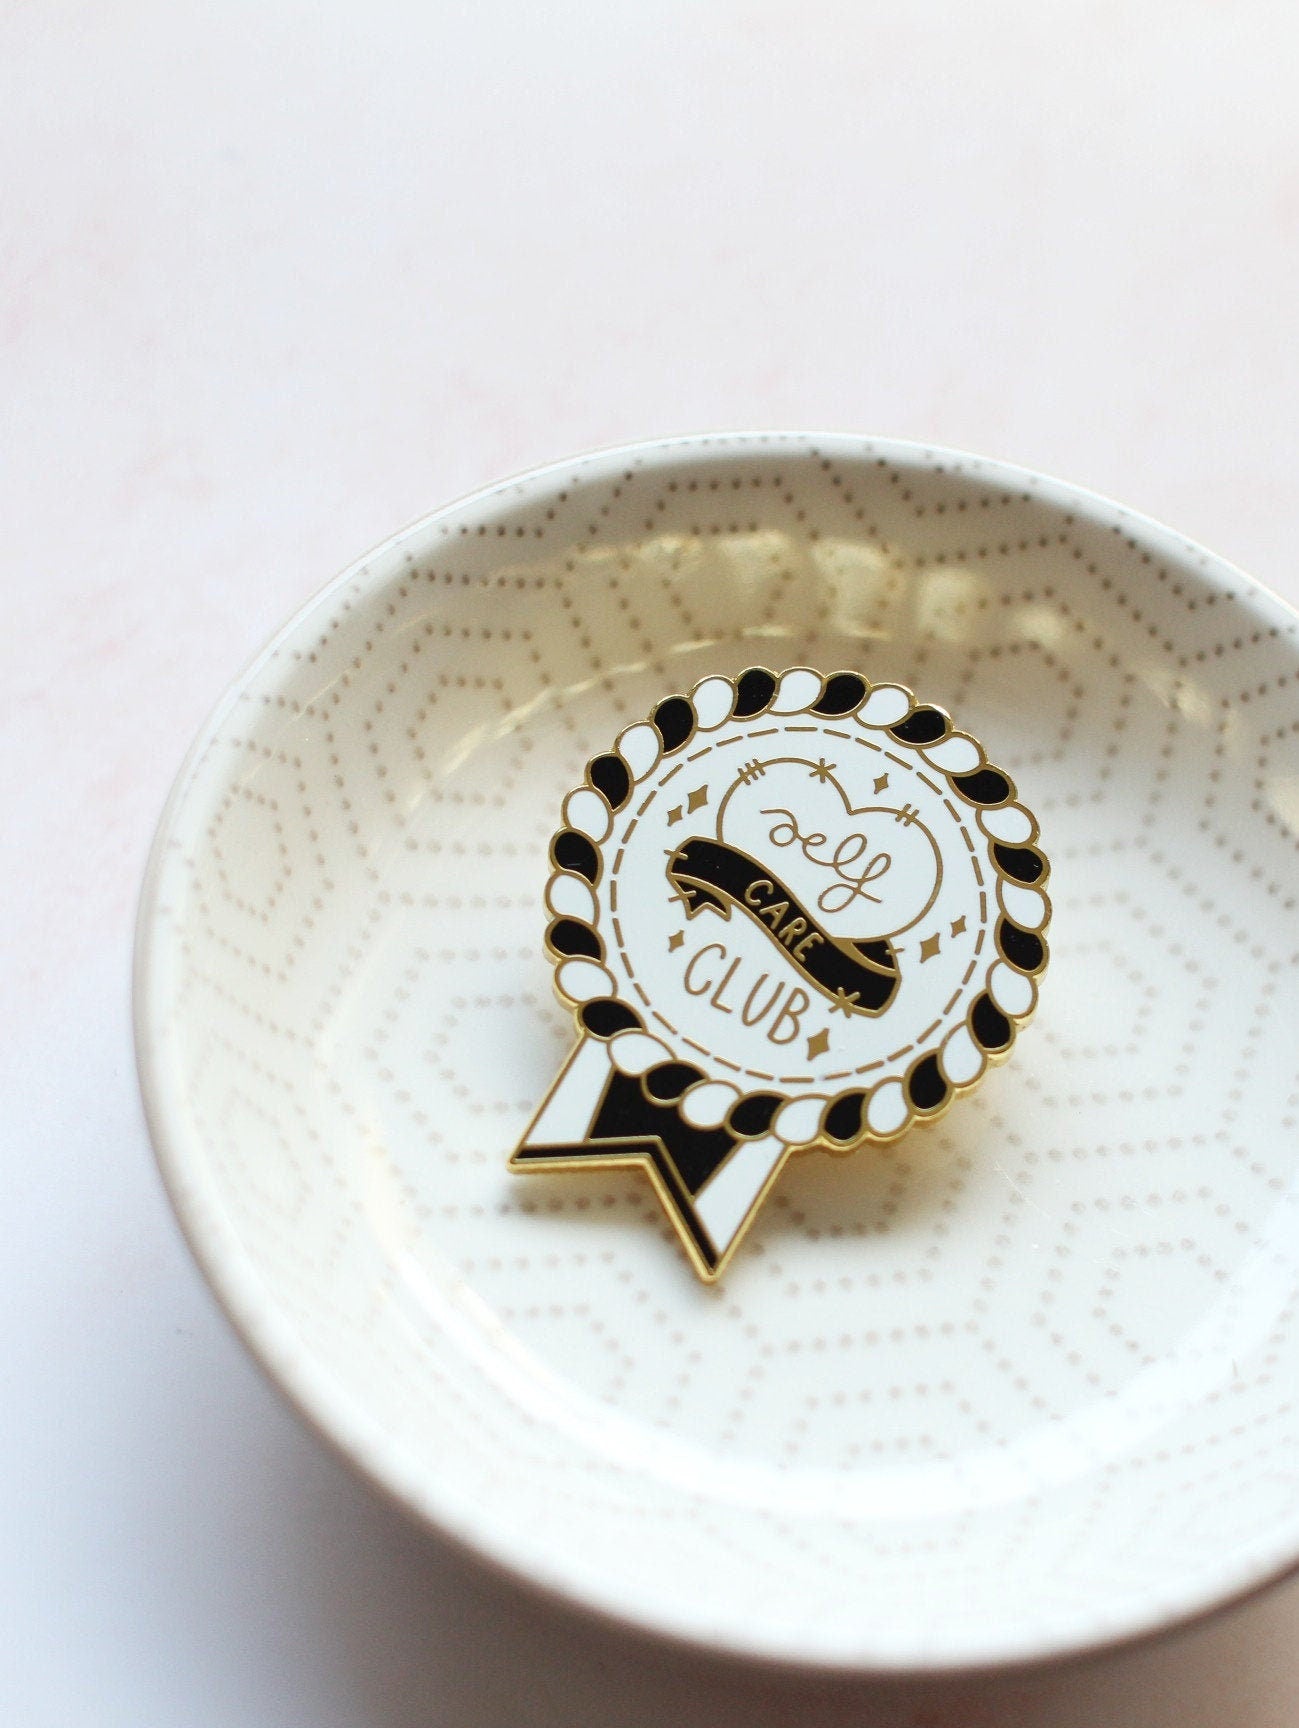 Self Care Club | Self Care Badge | Self Love Collectors Hard Enamel Pin Badge | Kawaii Aesthetic Birthday Gift | Christmas Present